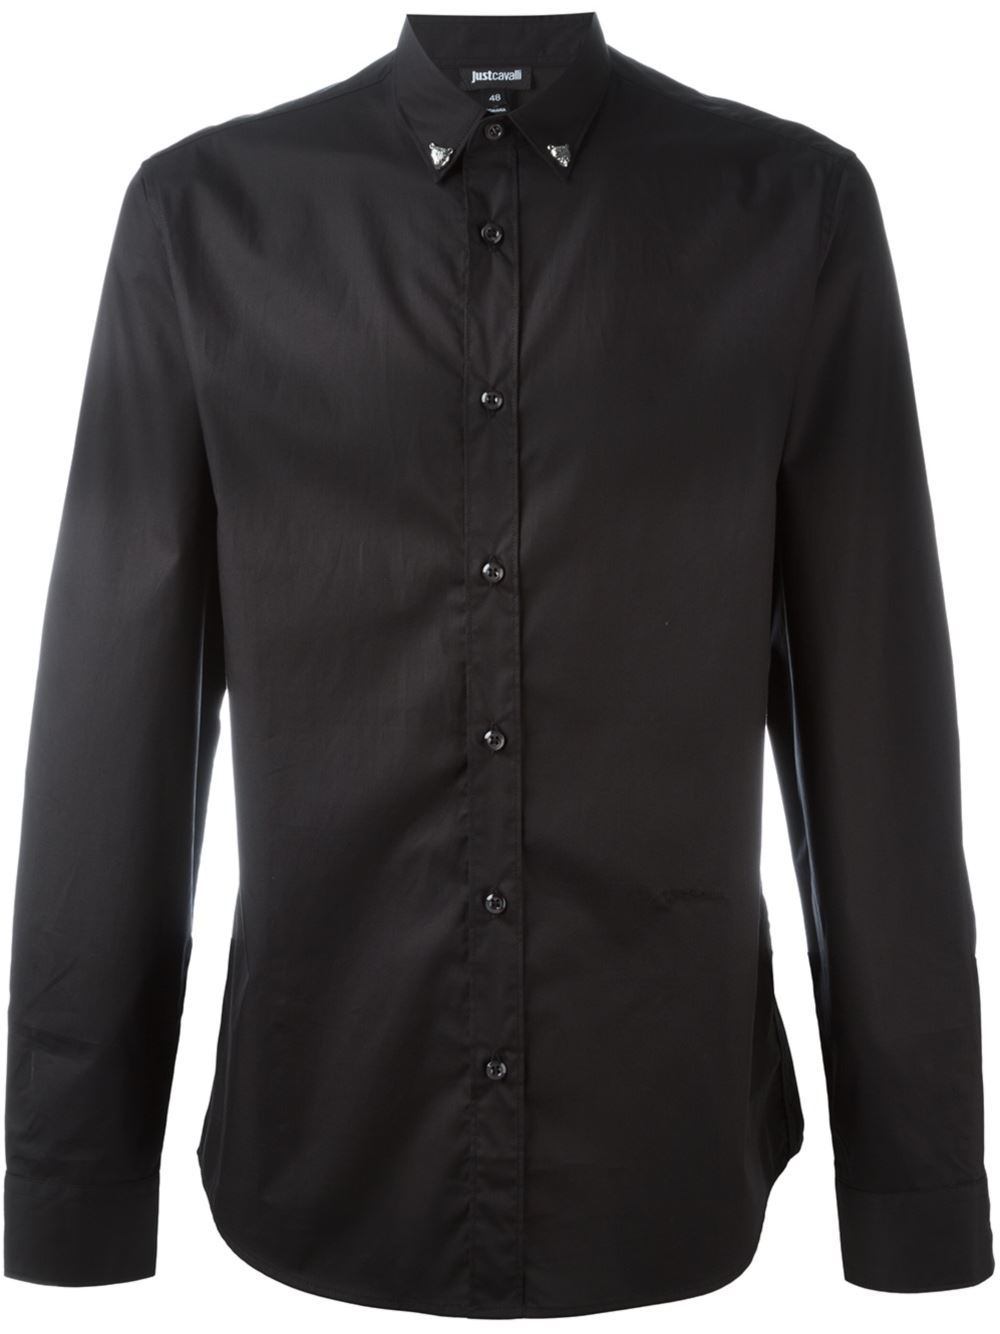 Just Cavalli Button Down Collar Shirt in Black for Men - Lyst